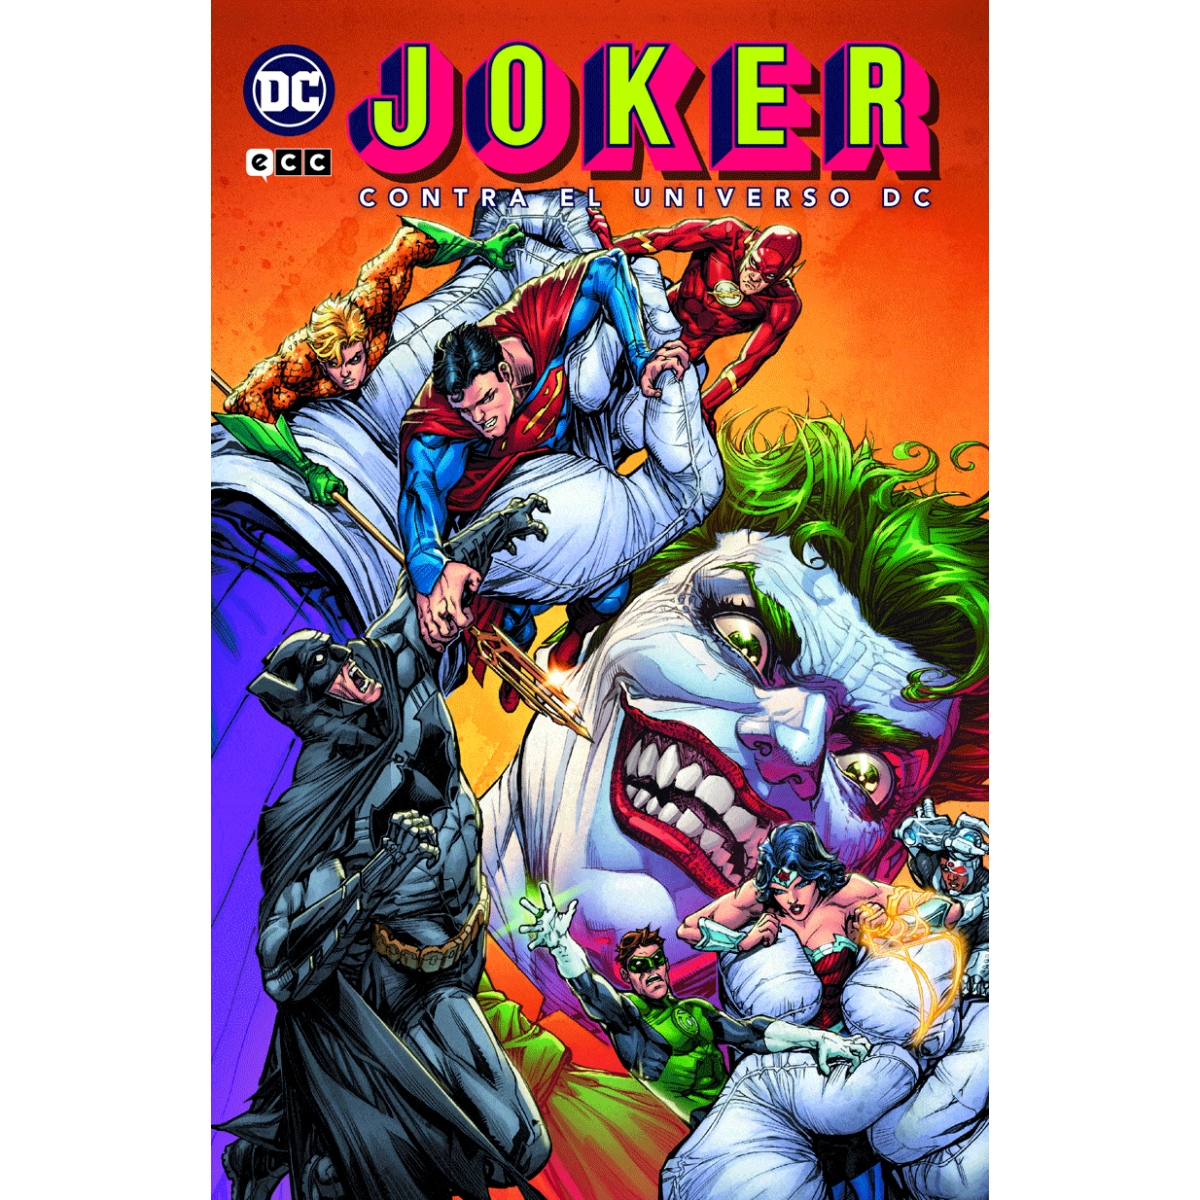 Joker Contra el Universo DC